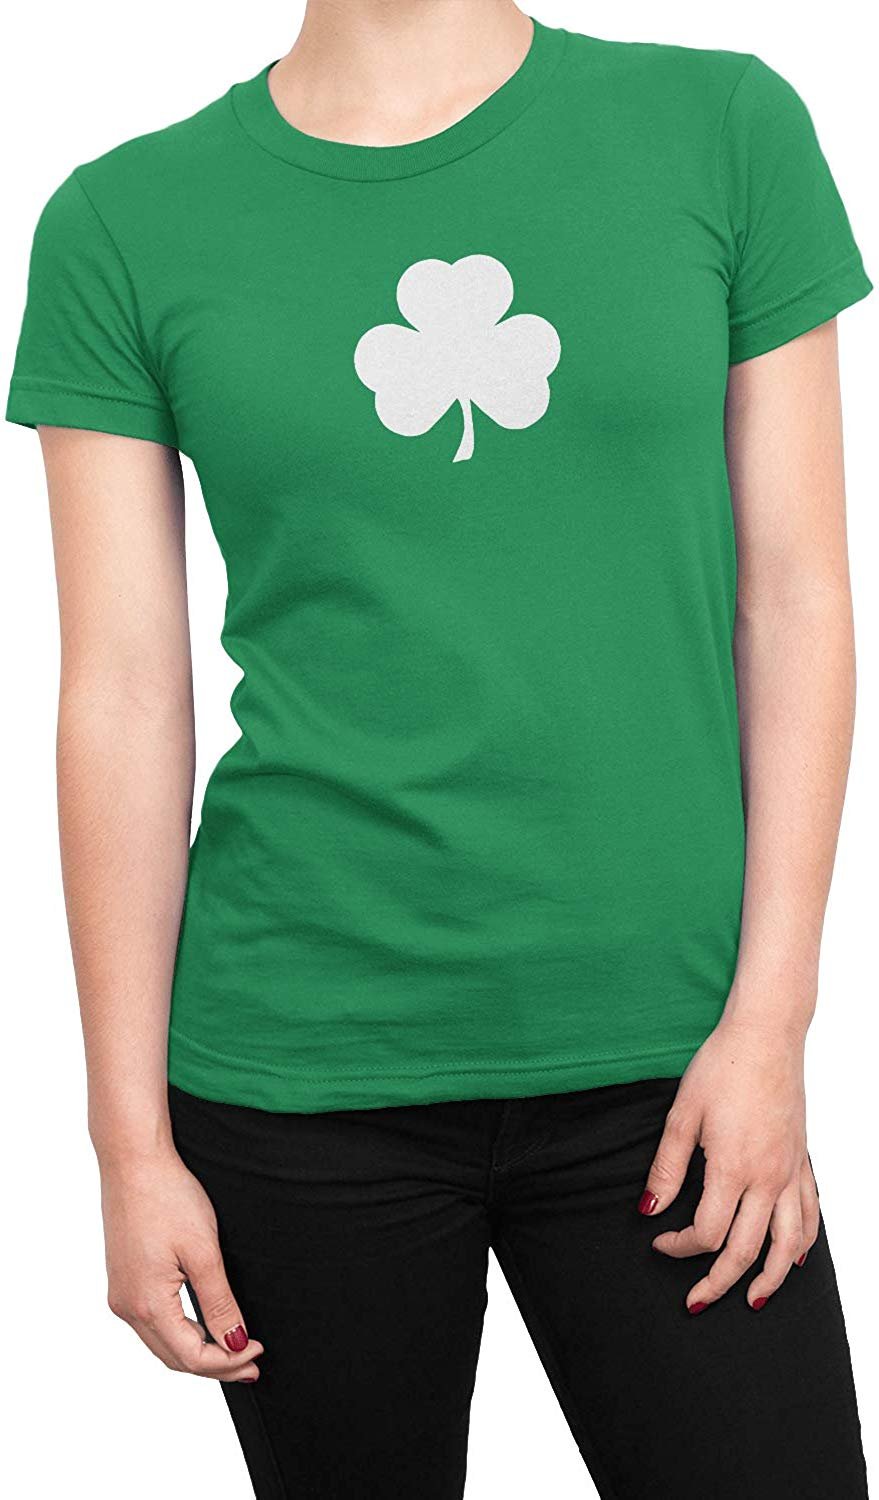 Ladies Shamrock Tee's St Patrick's Day Women's Party Irish Green Shirts